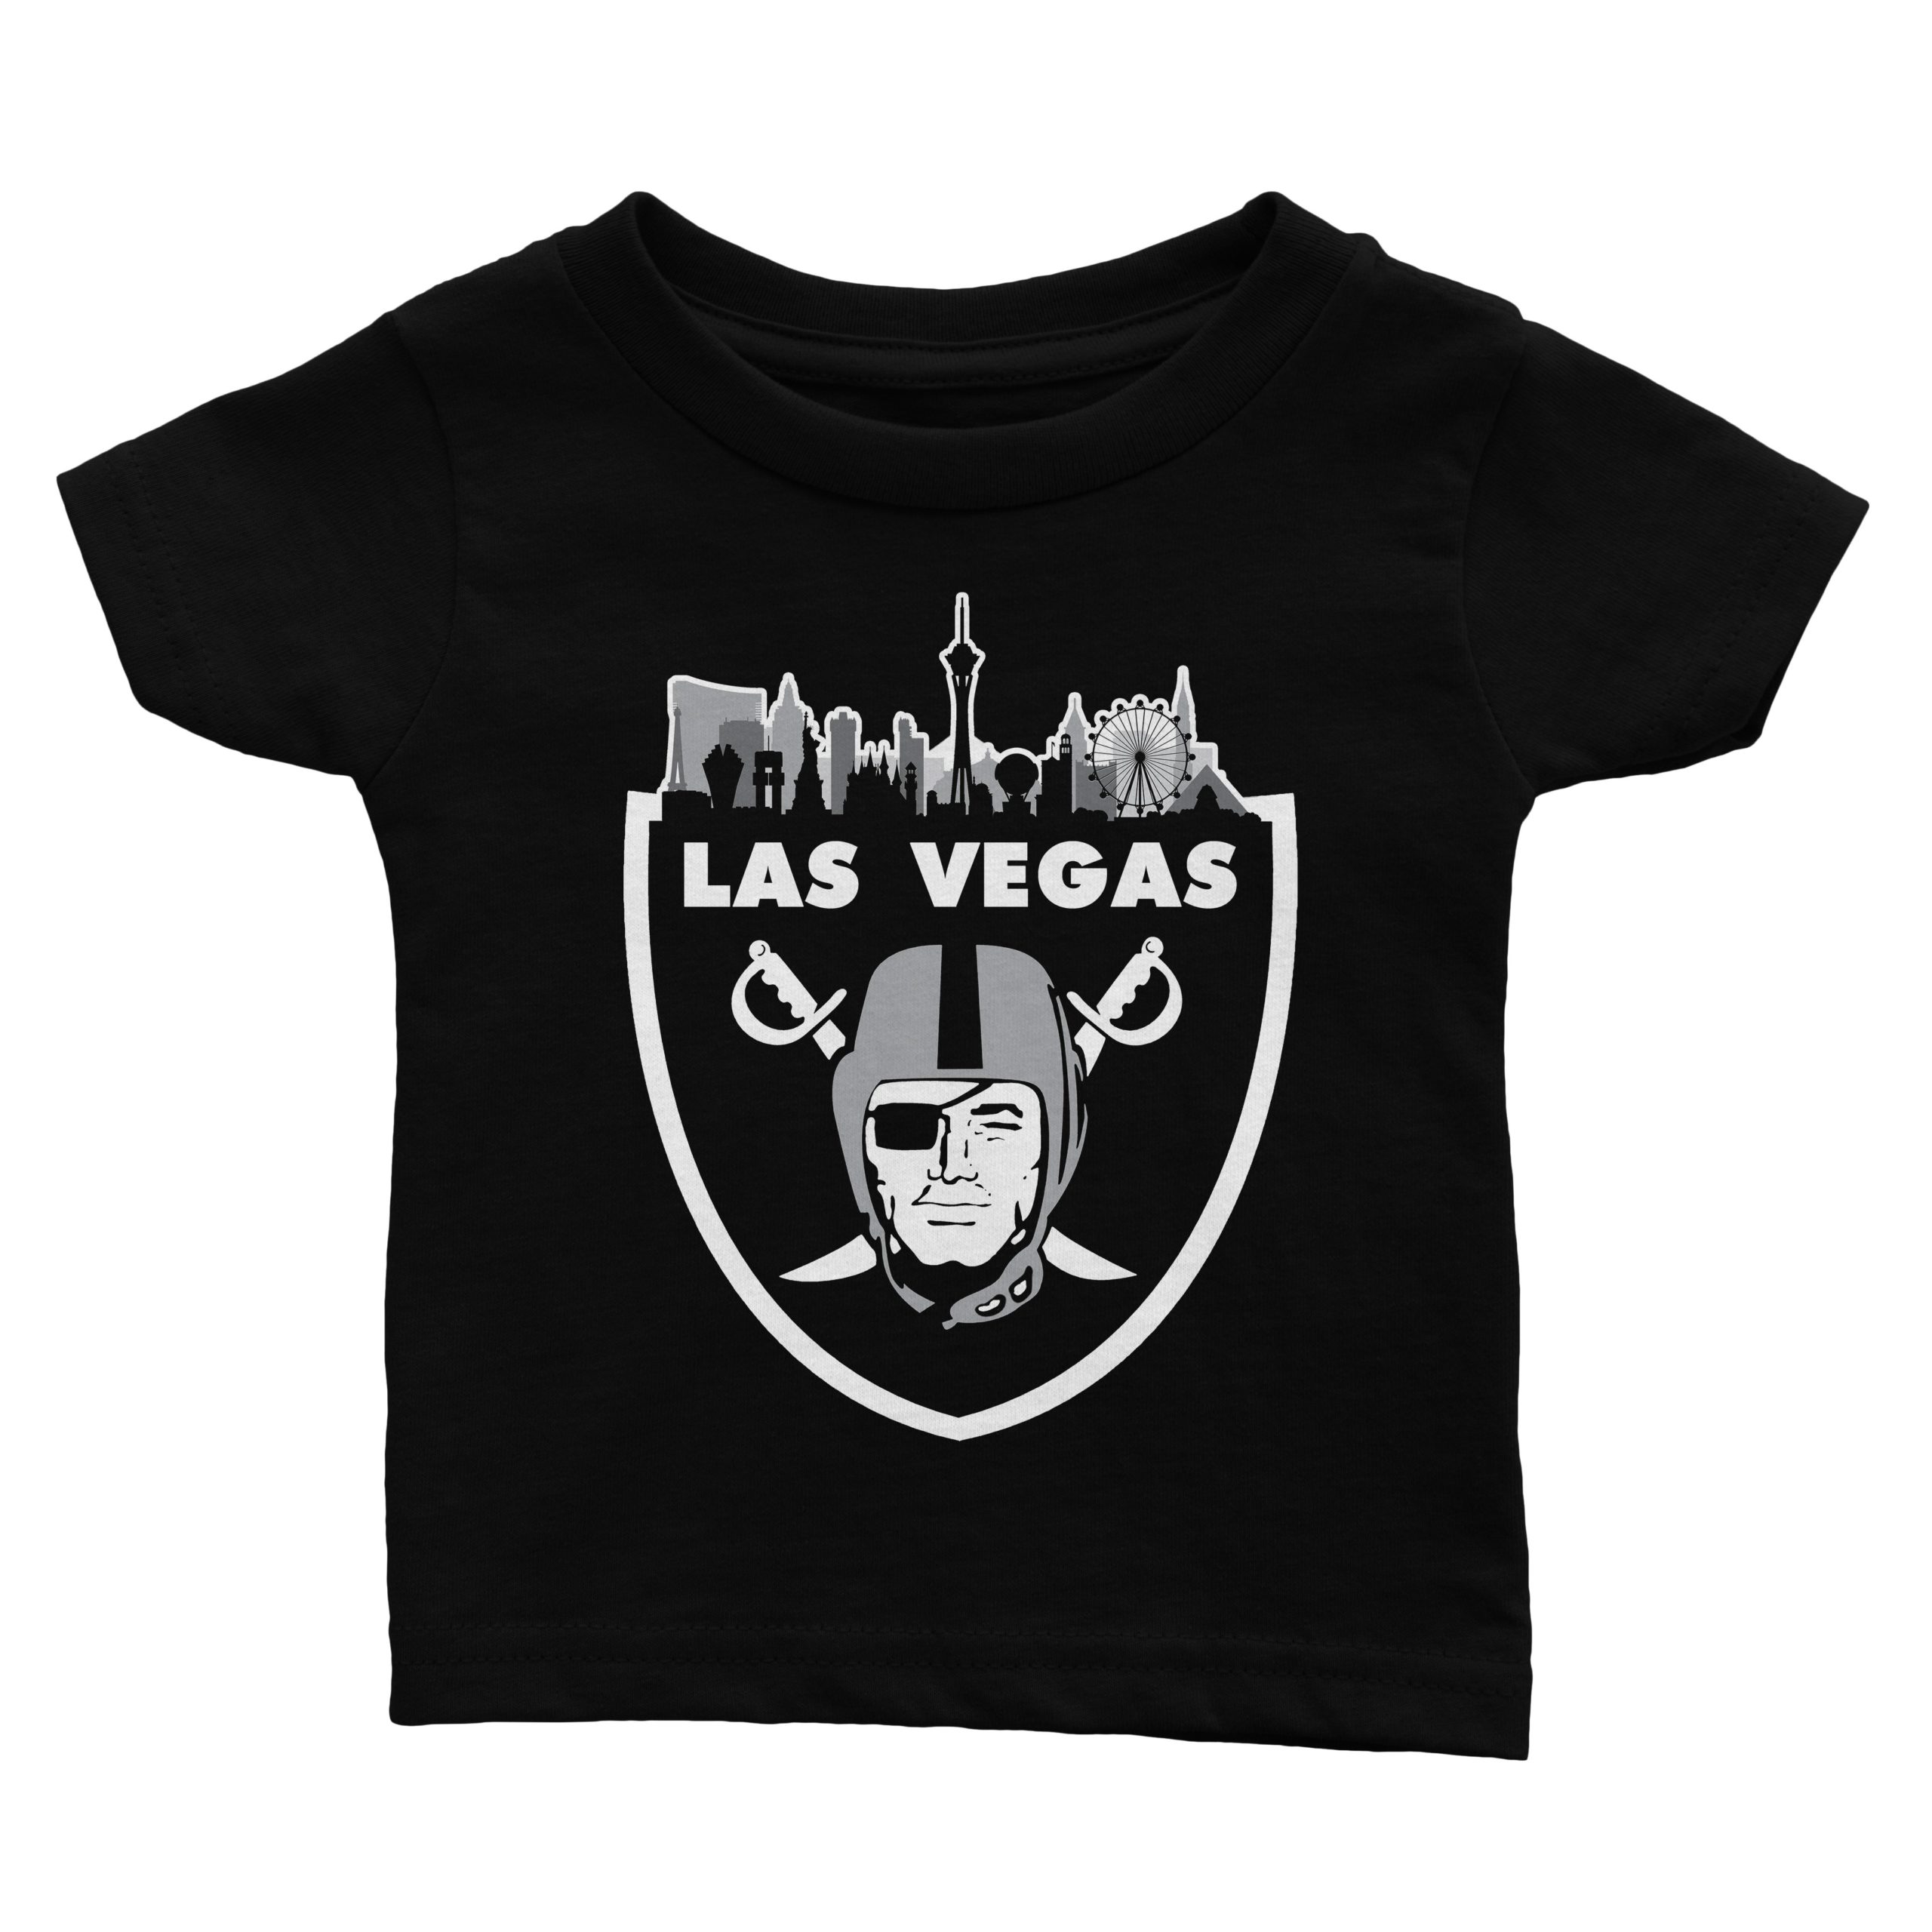 Cuztom Threadz Las Vegas Raiders Grey T-Shirt (Men) Grey Small